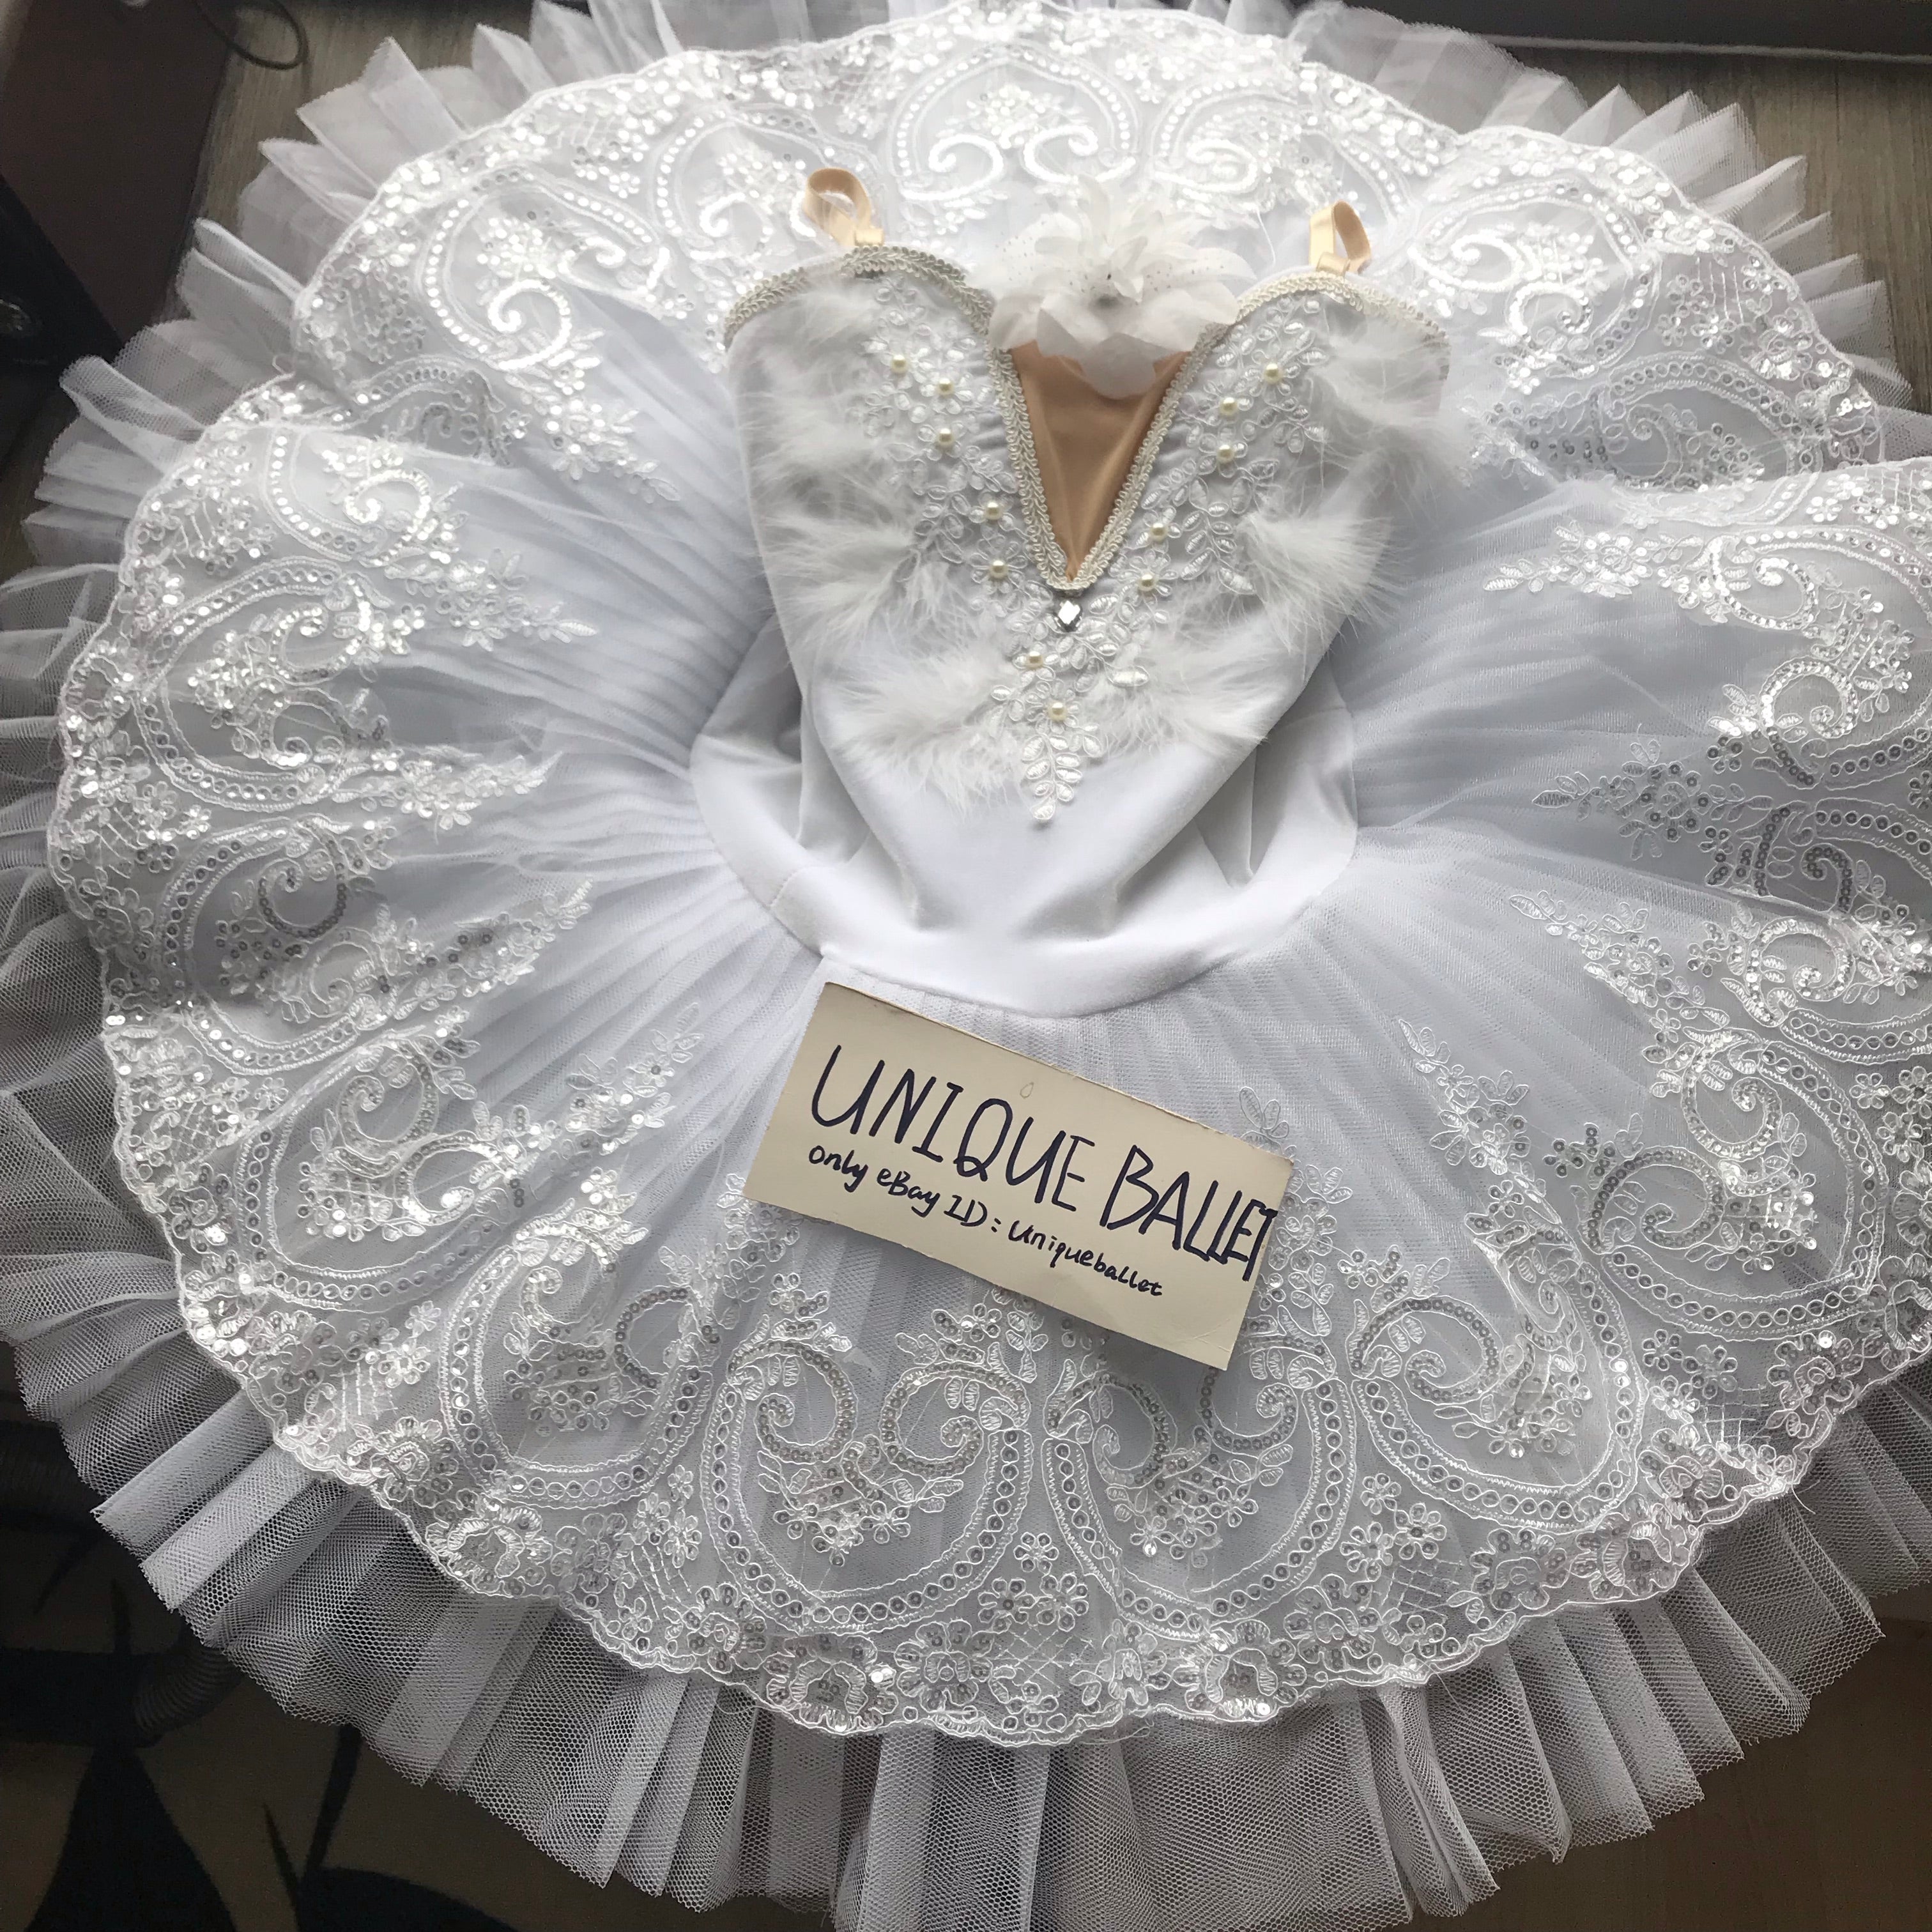 White Swan Lake Classic Ballet TuTu Costume (Unprofessional)-5CWHTWHTCLA